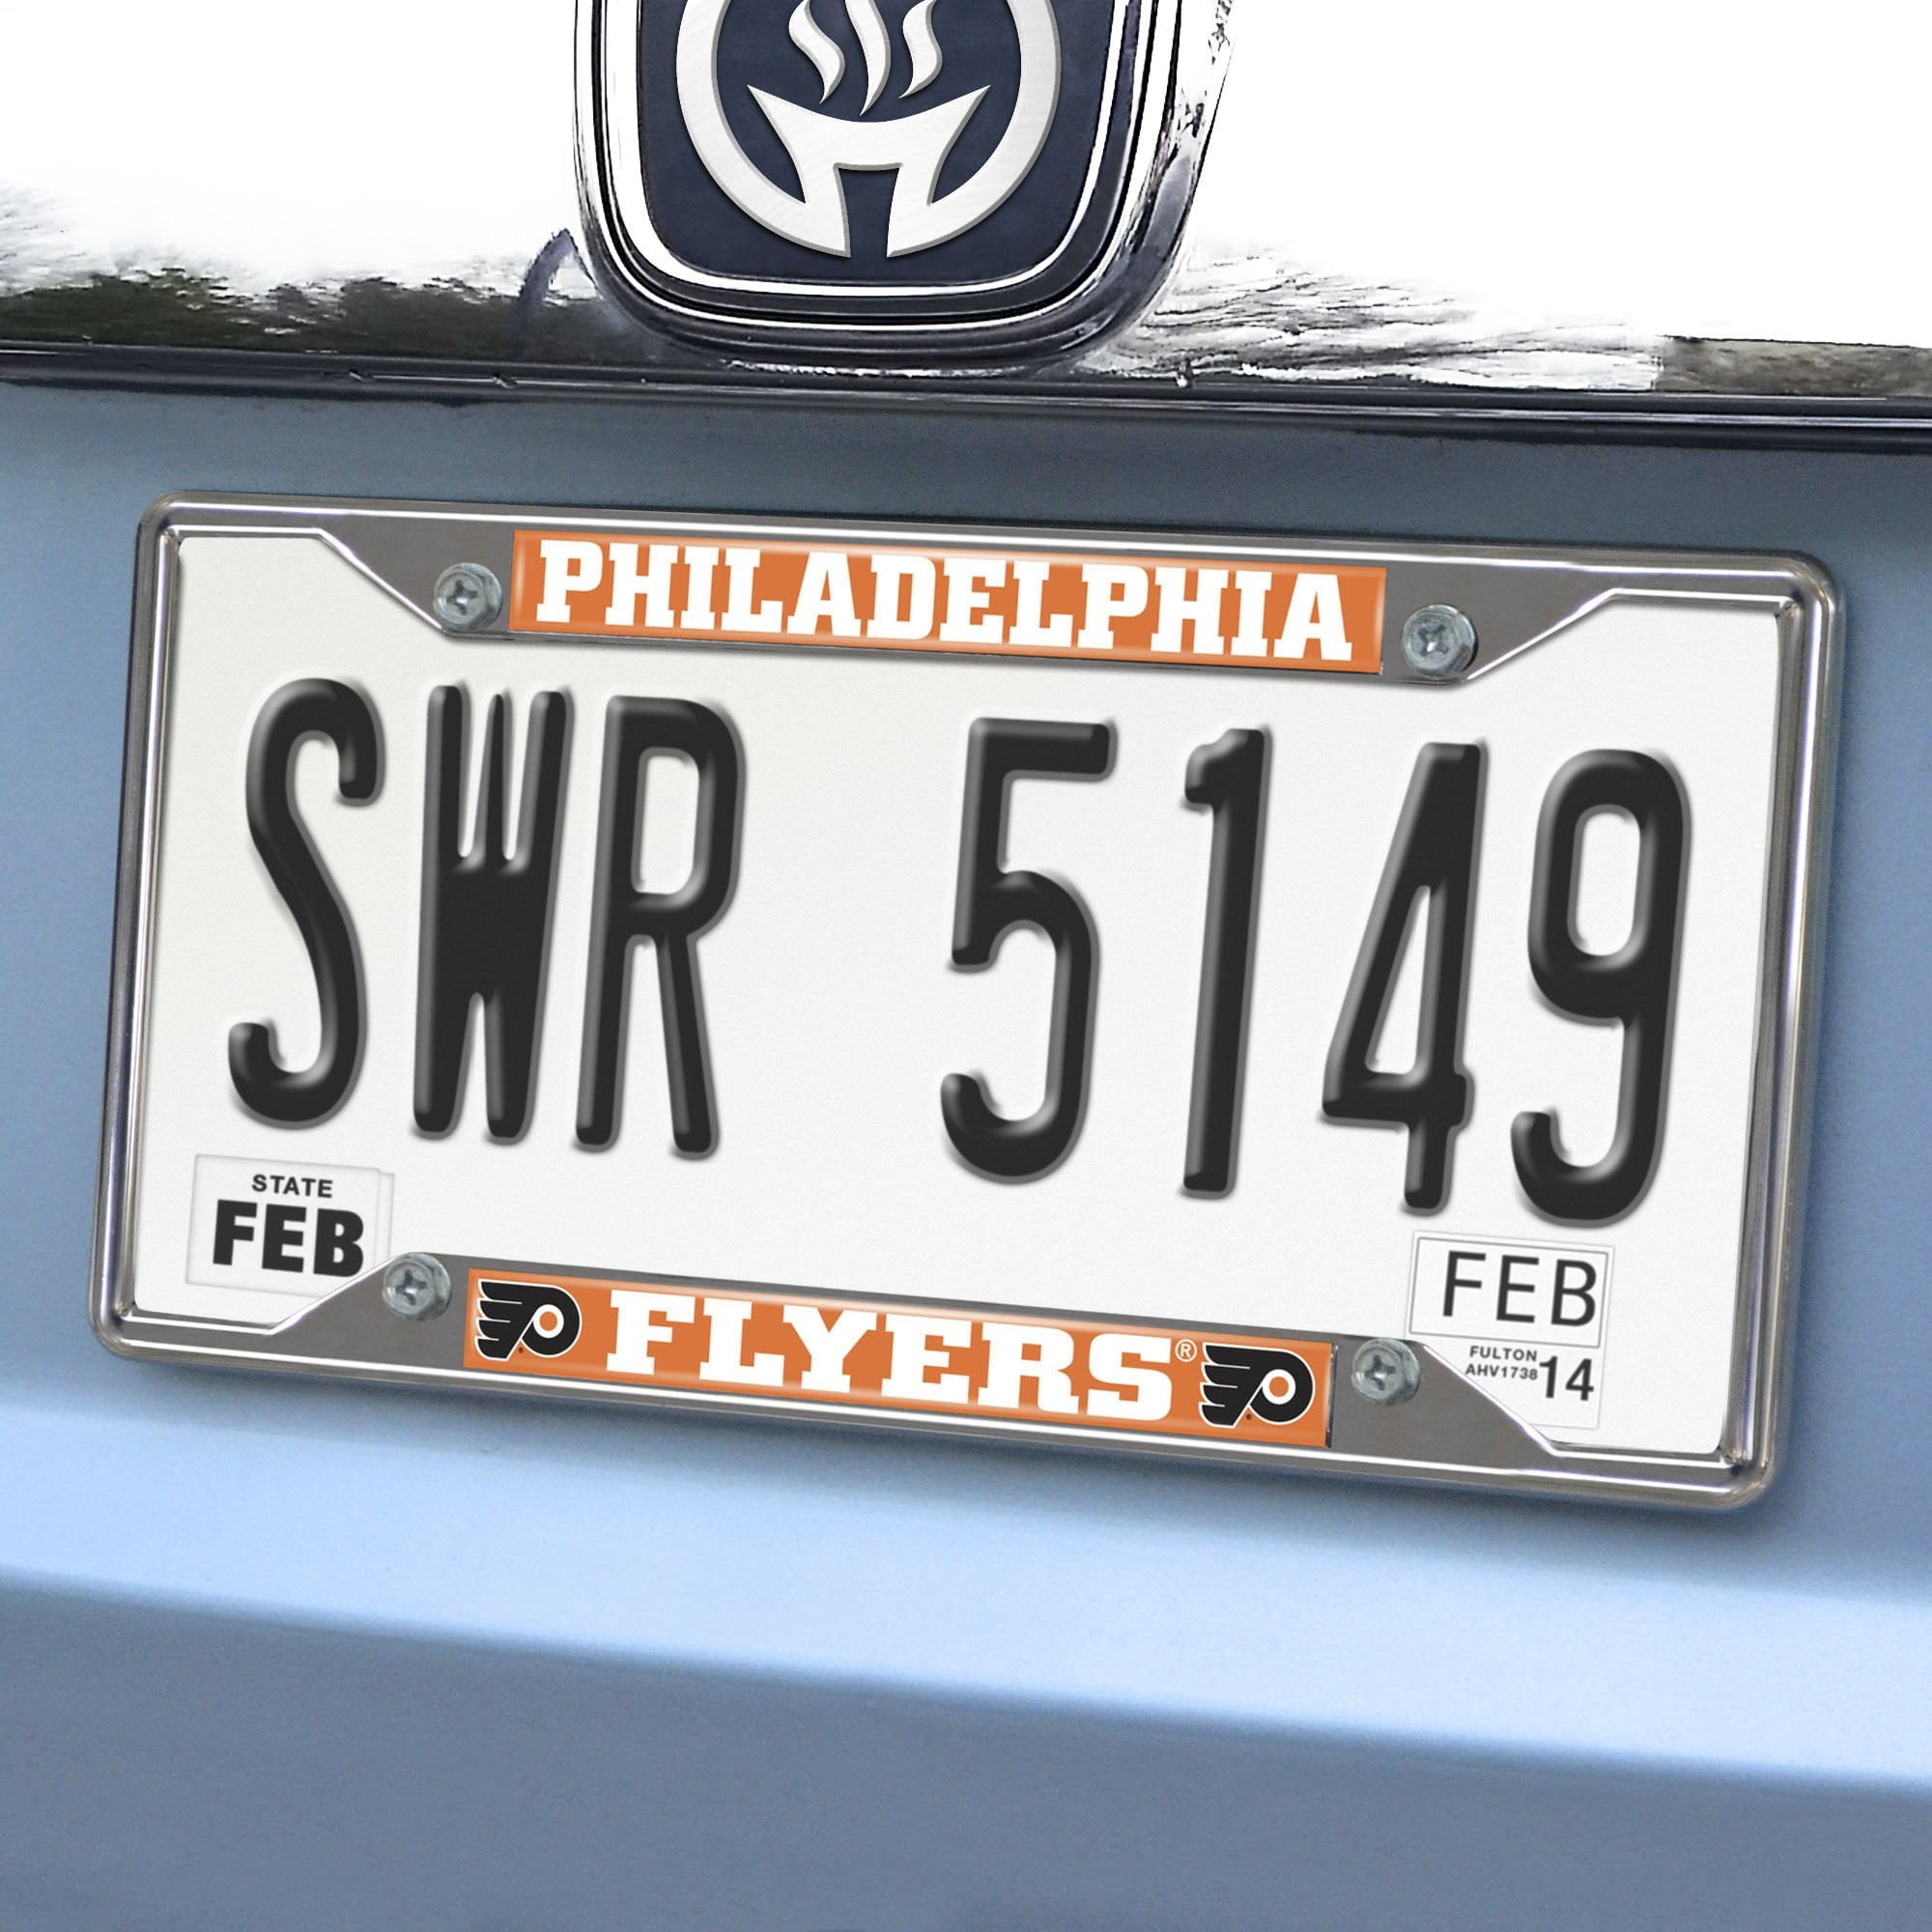 NHL - Philadelphia Flyers License Plate Frame & Accessories